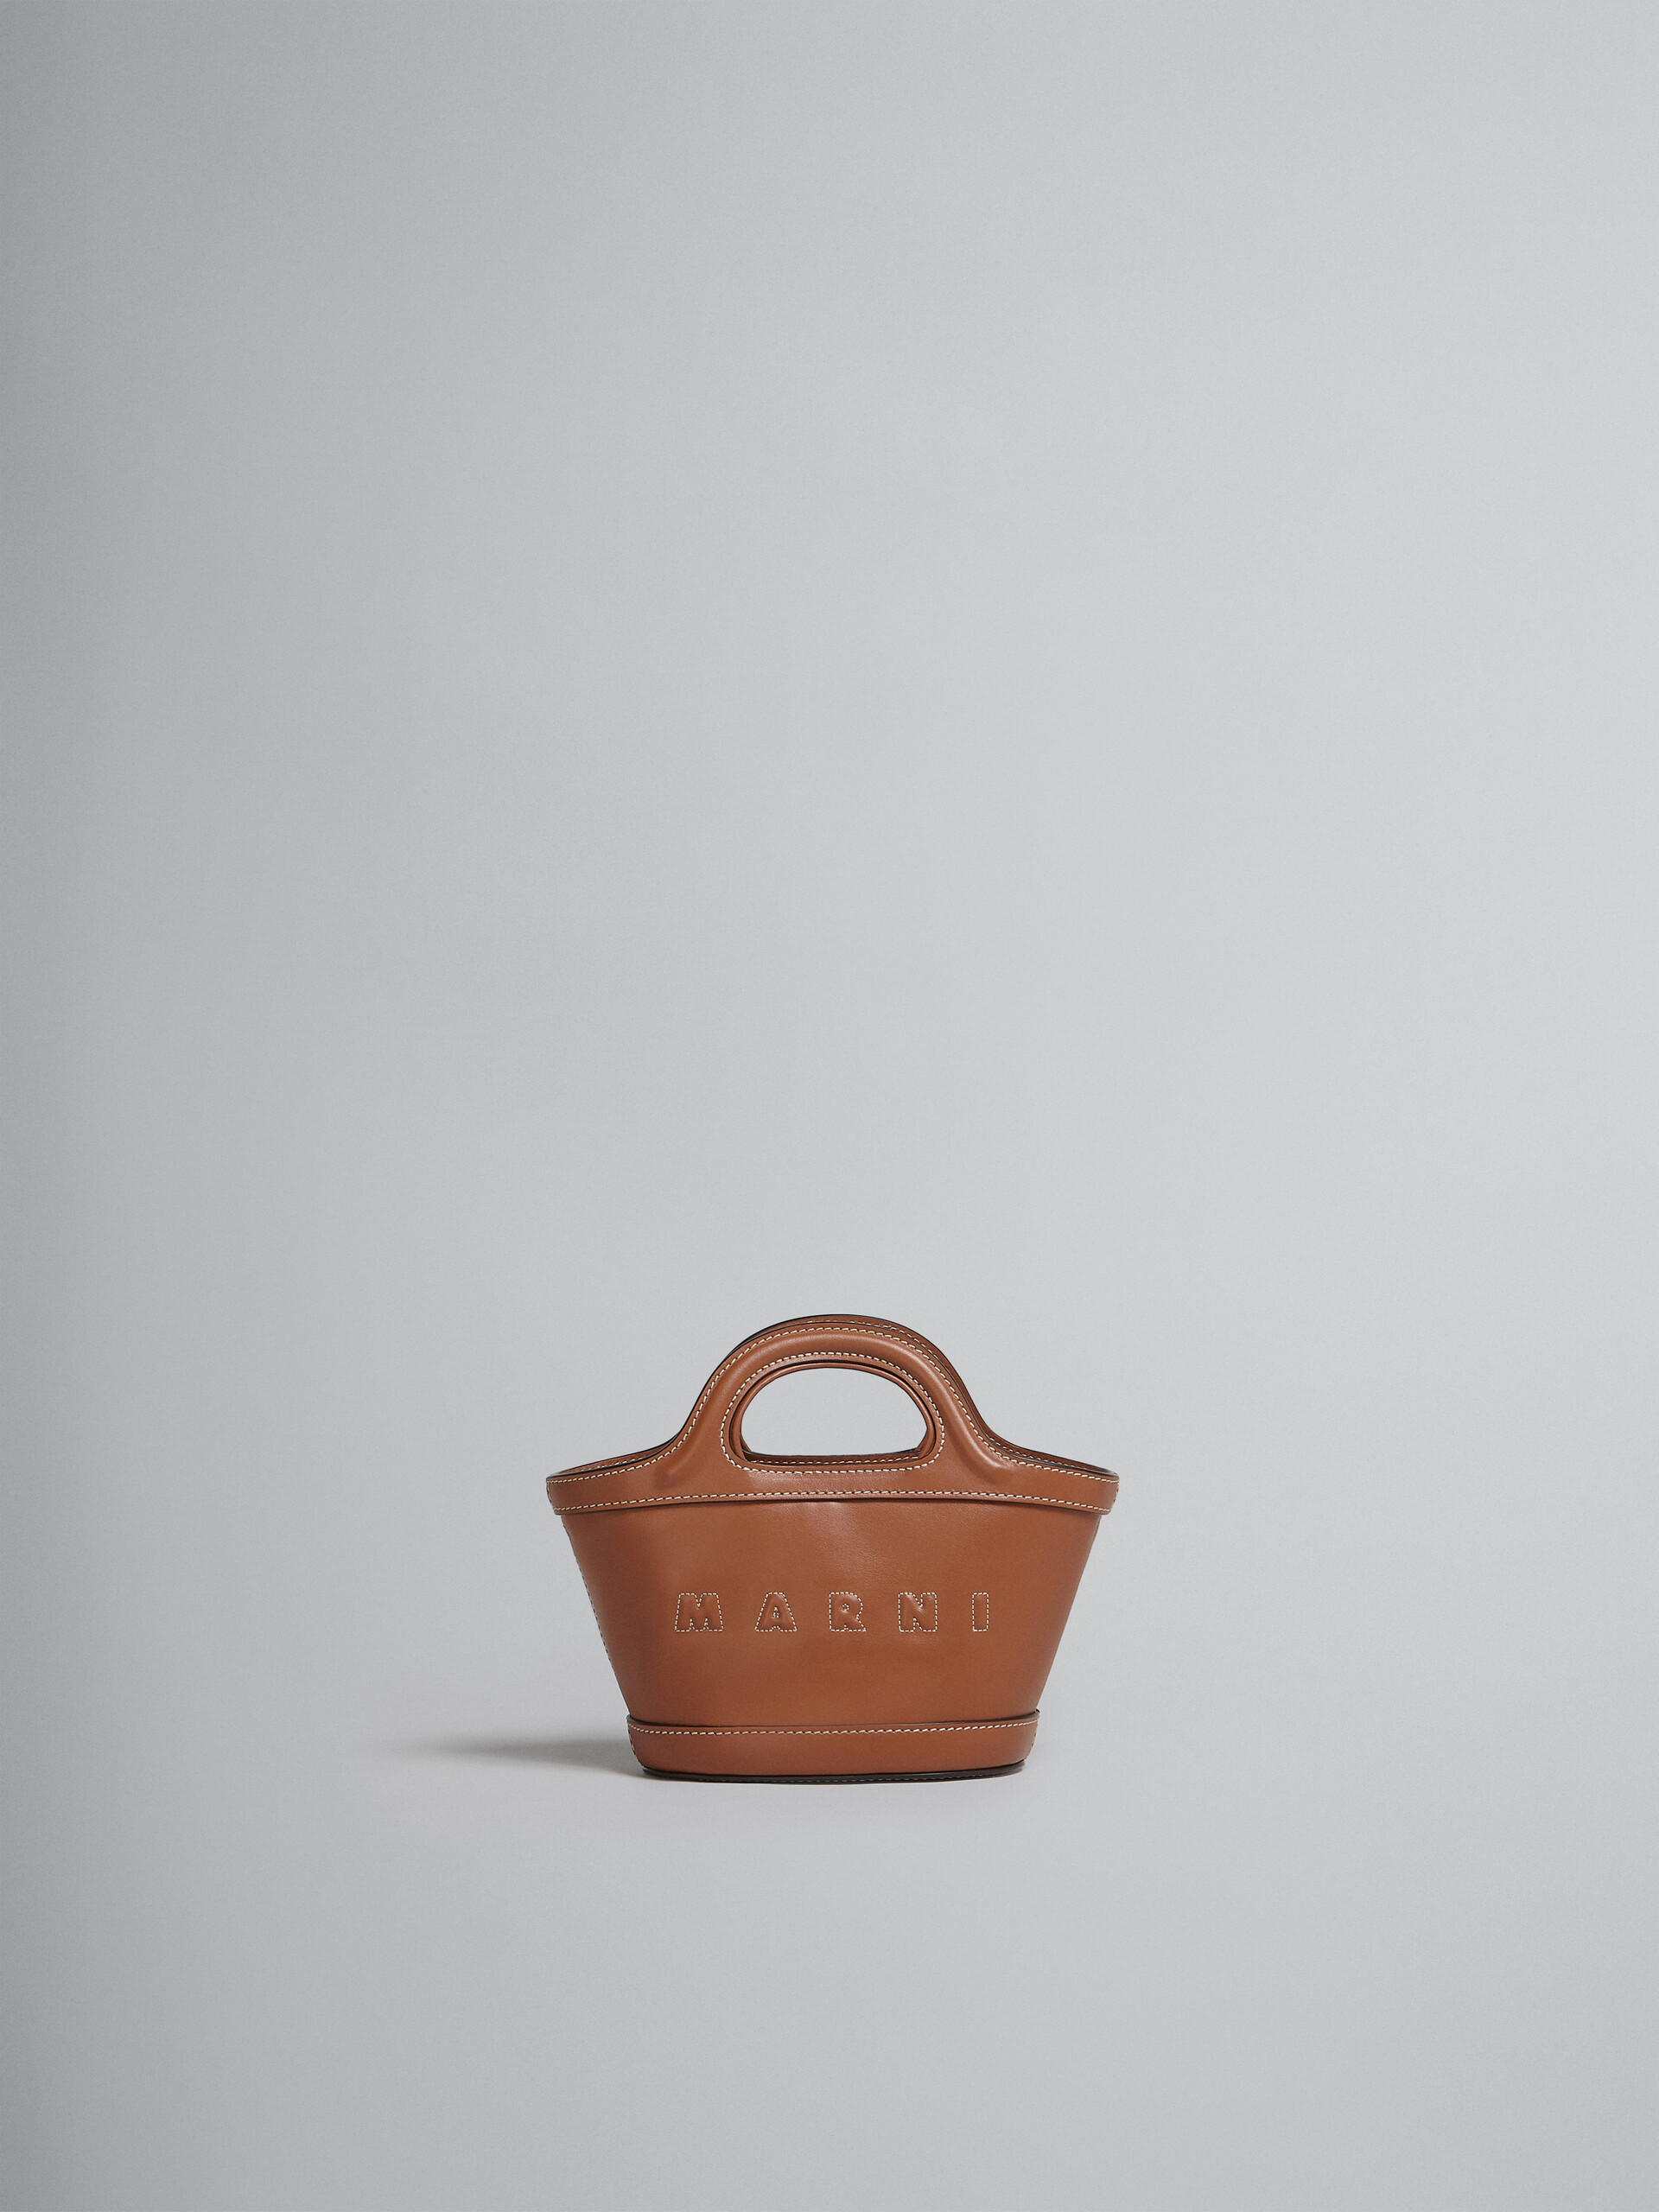 Tropicalia Micro Bag in brown leather - Handbag - Image 1